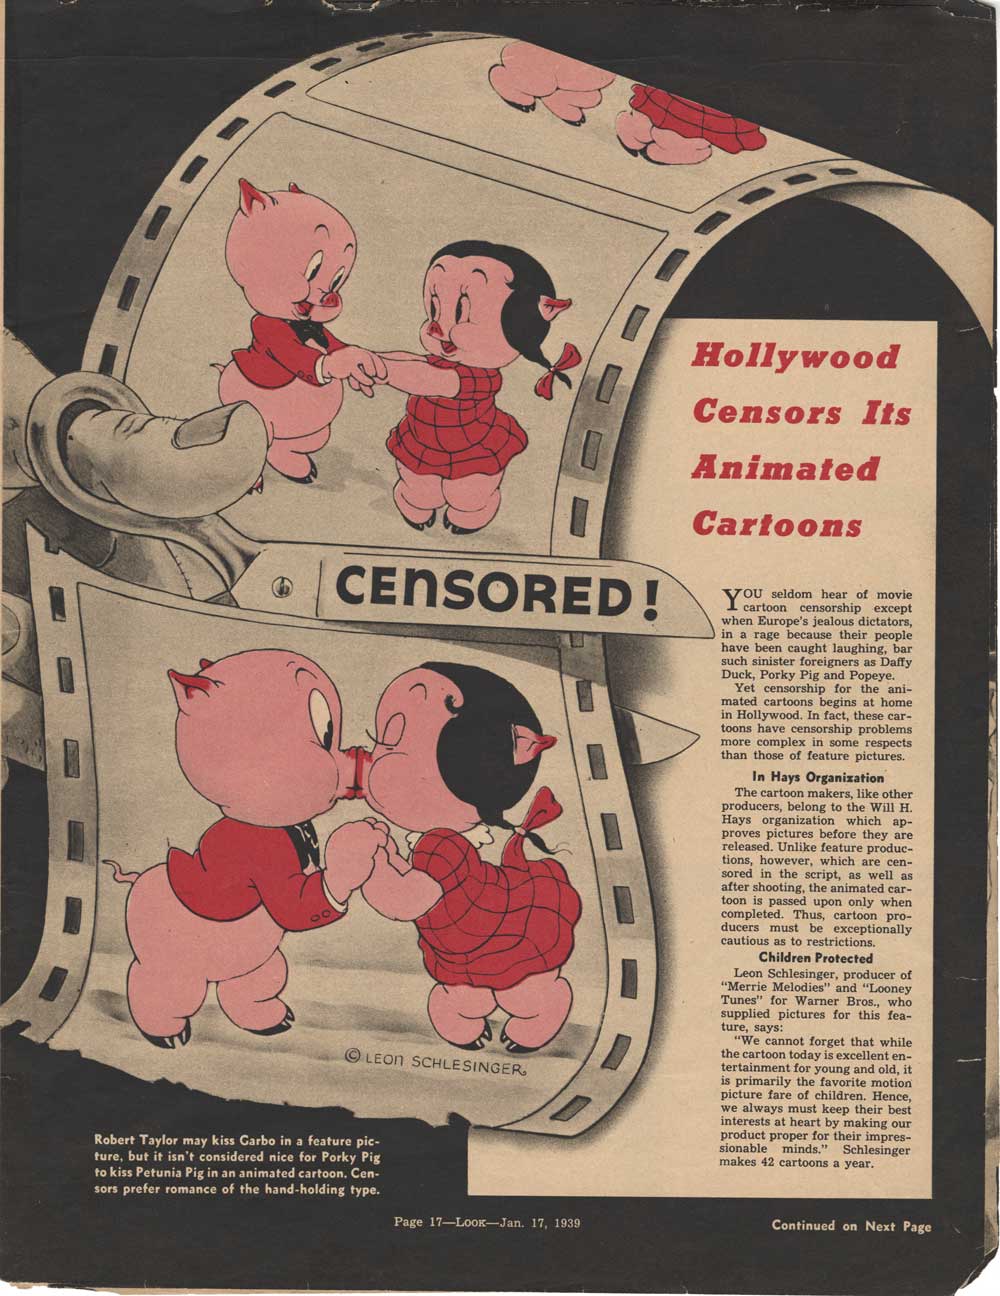 How Hollywood Censored Its Animated Cartoons.